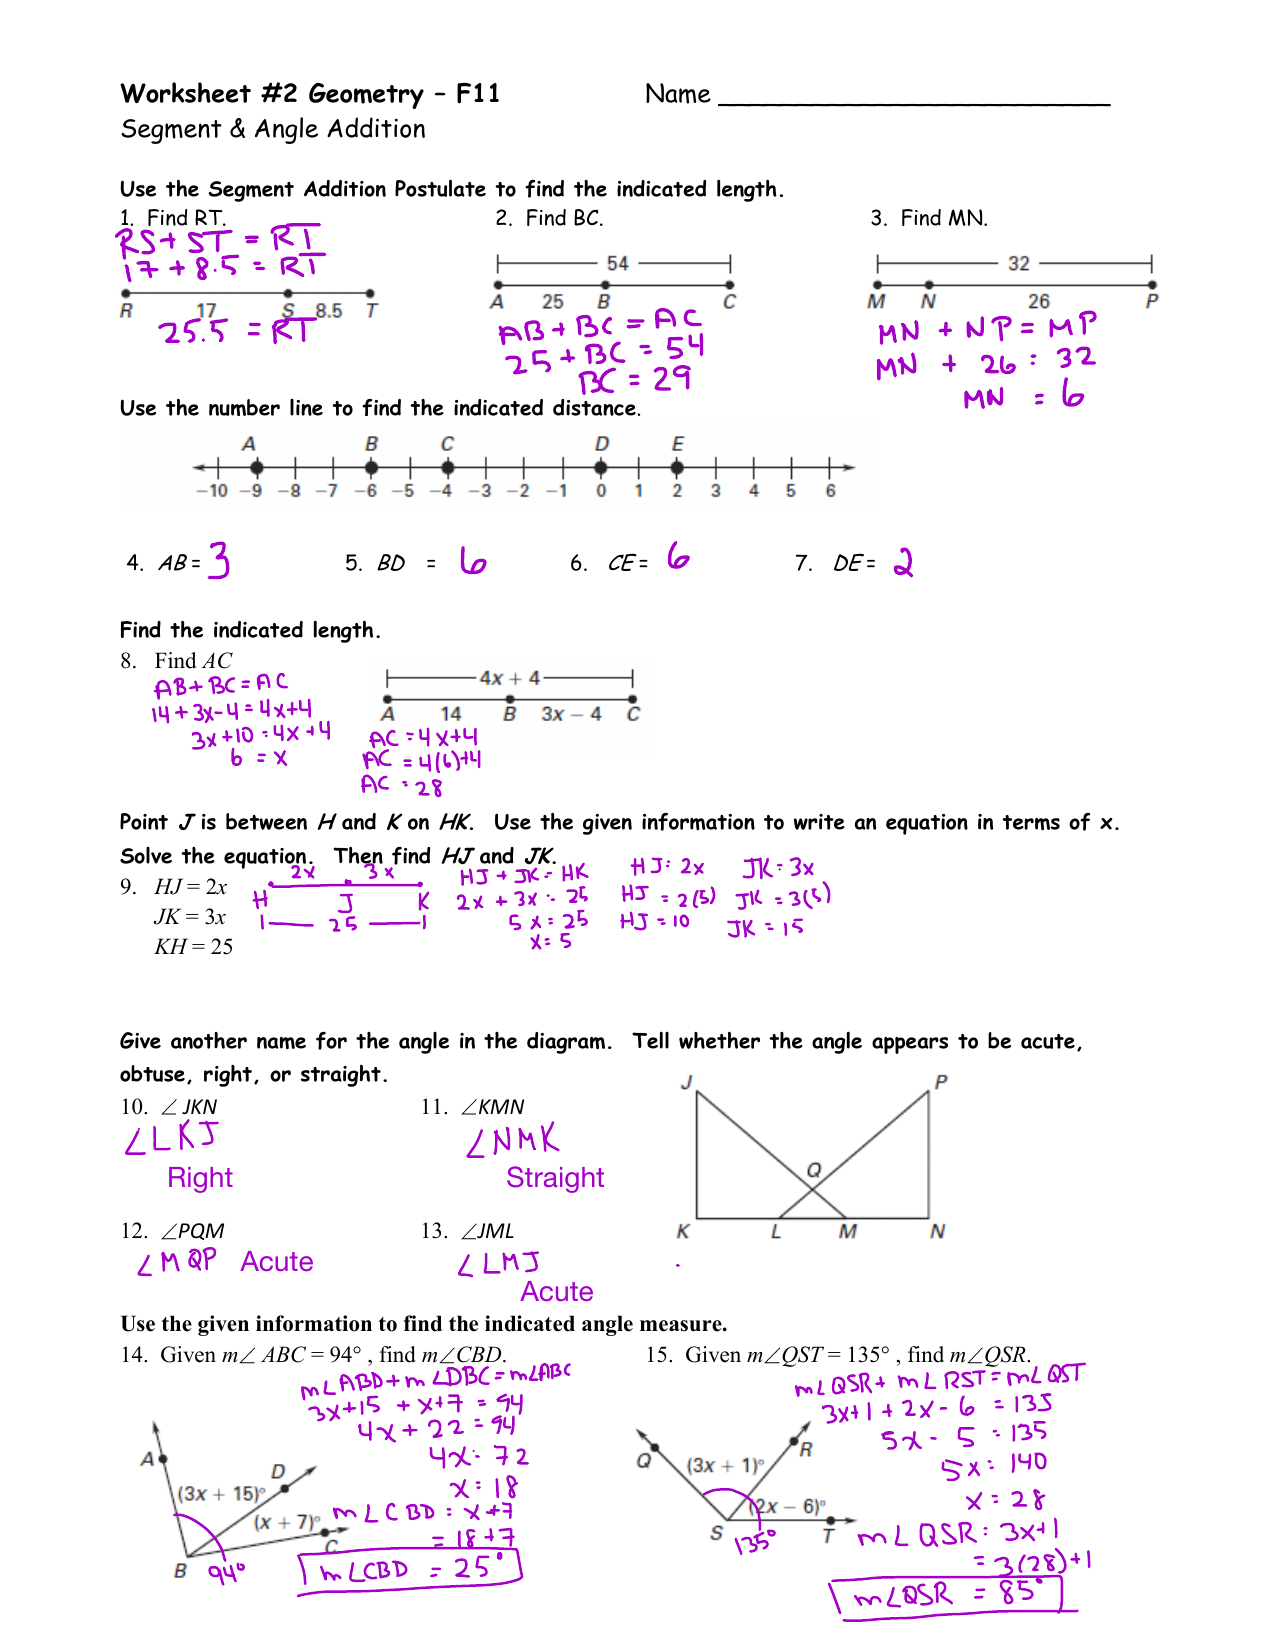 Geometry Worksheet Angle And Segment Addition Postulate Help